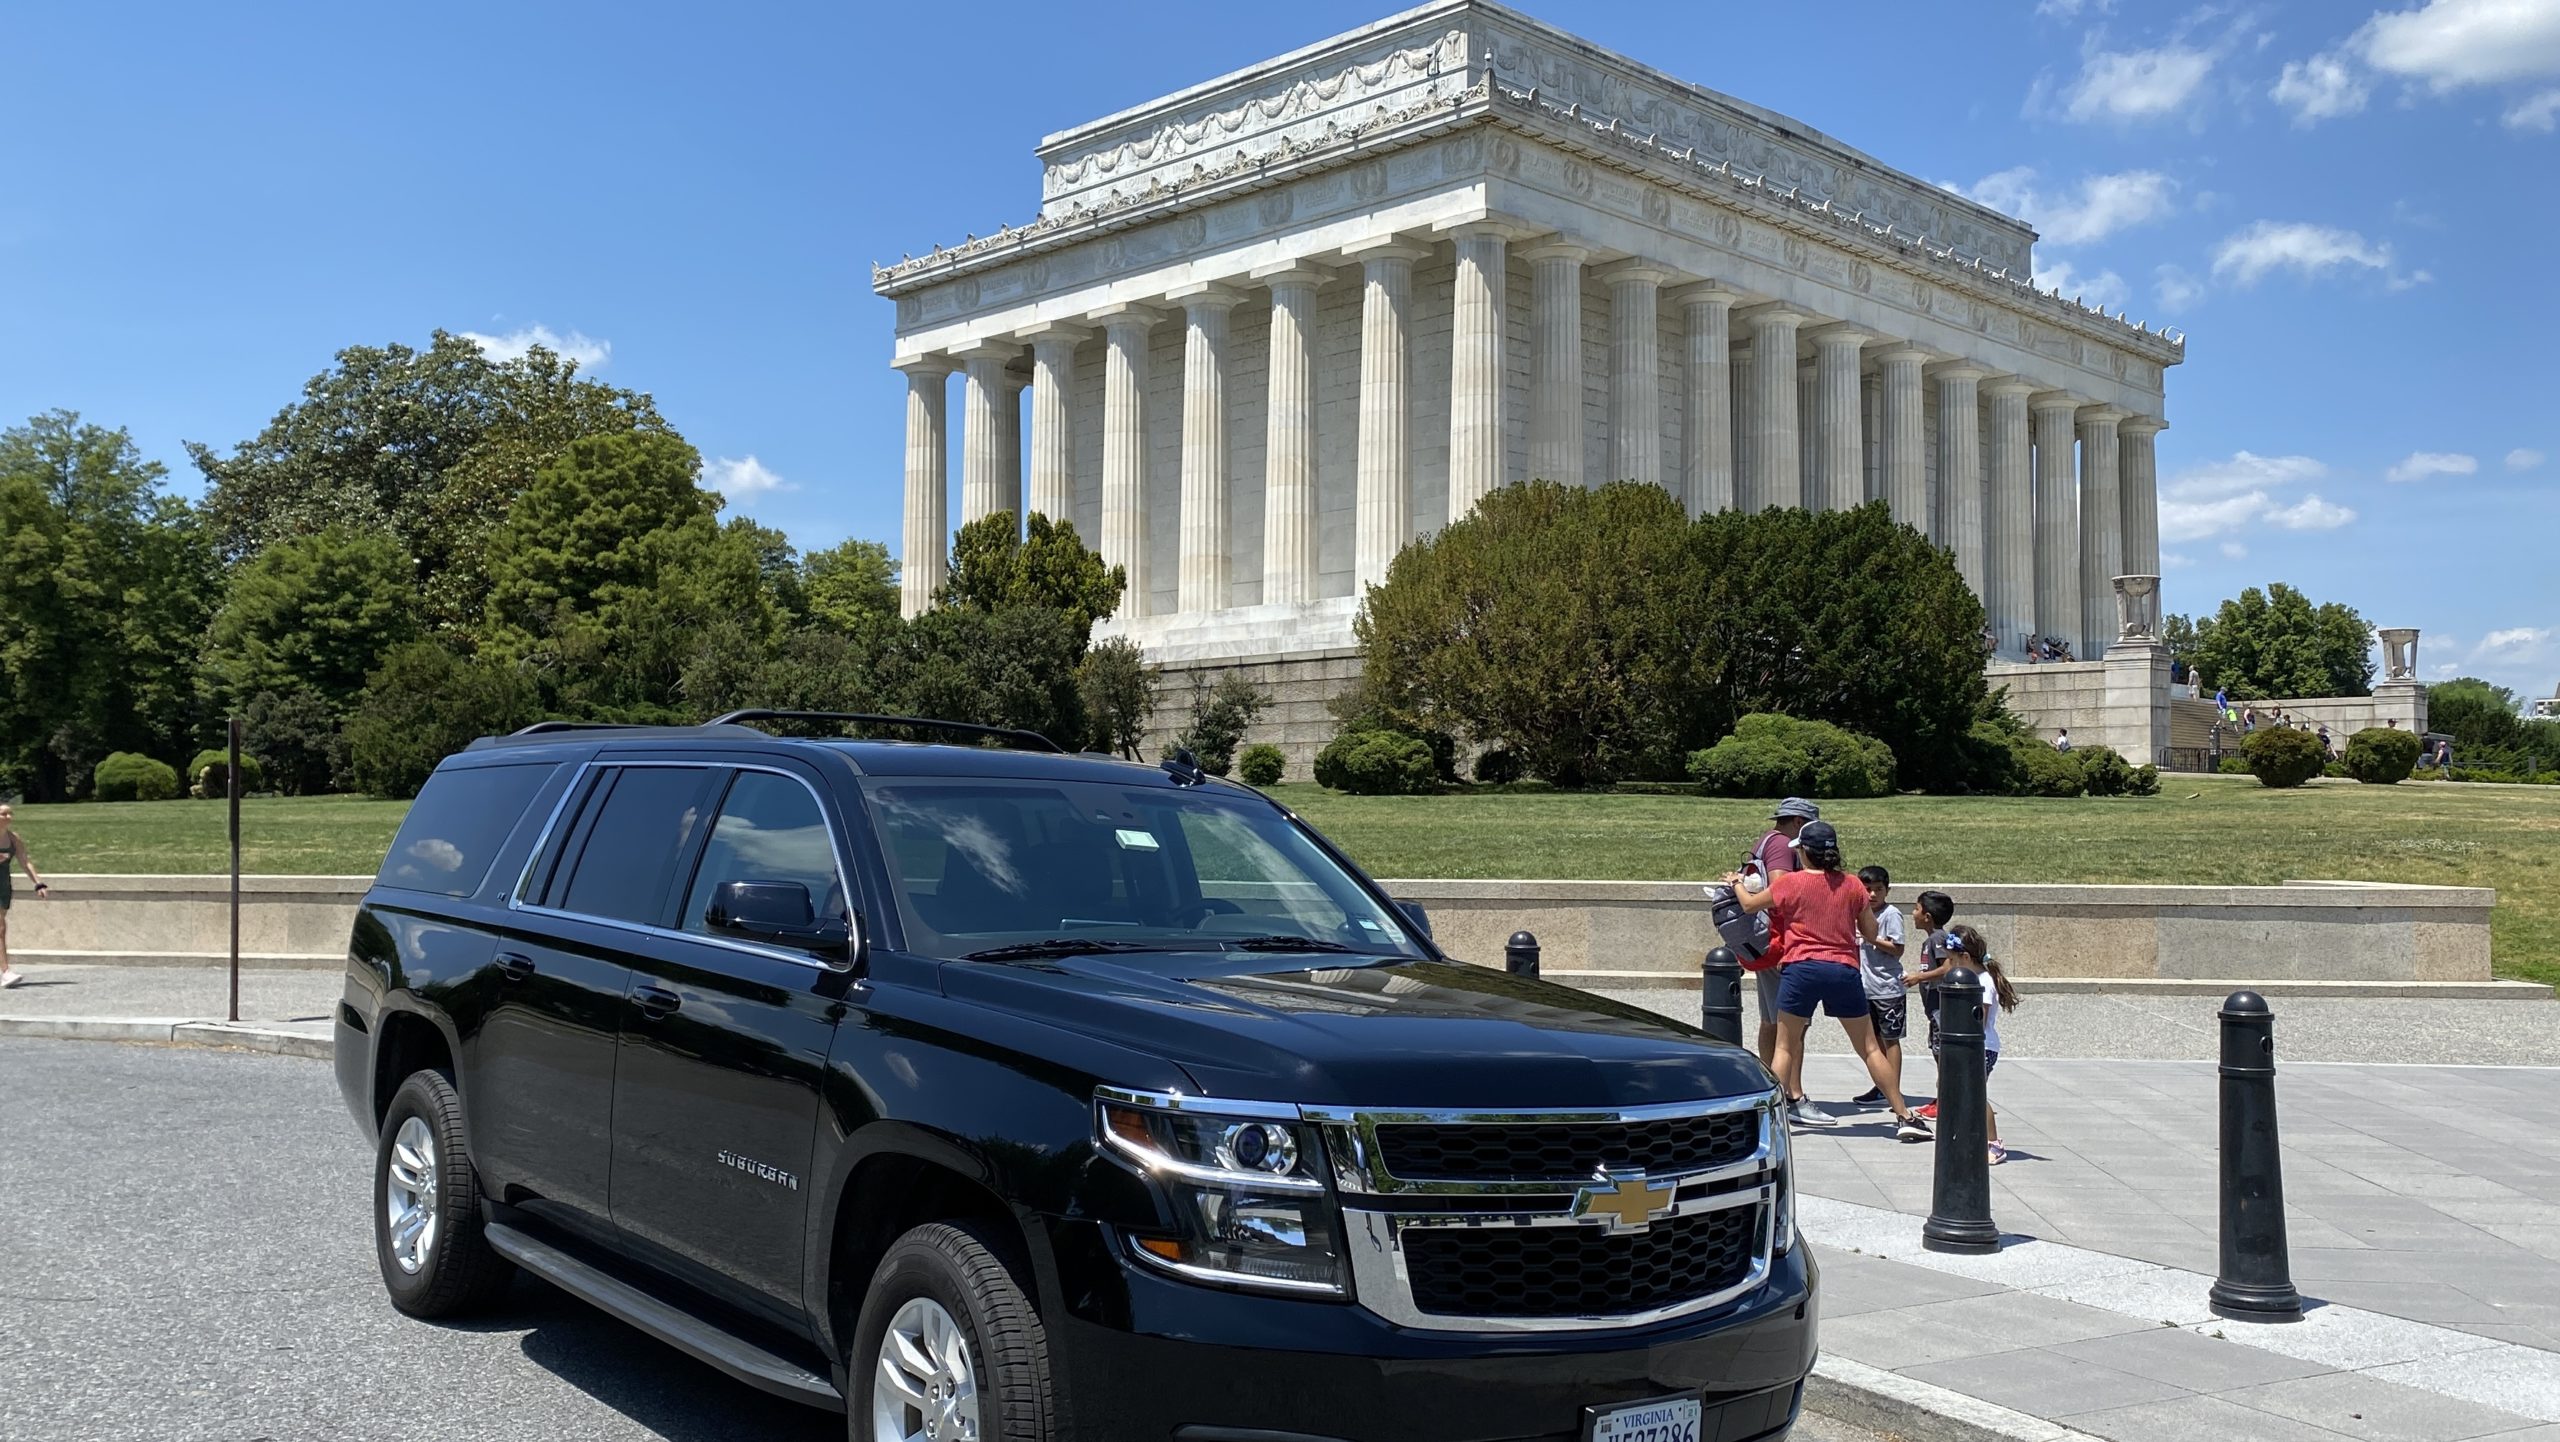 A black SUV at Lincoln Memorial